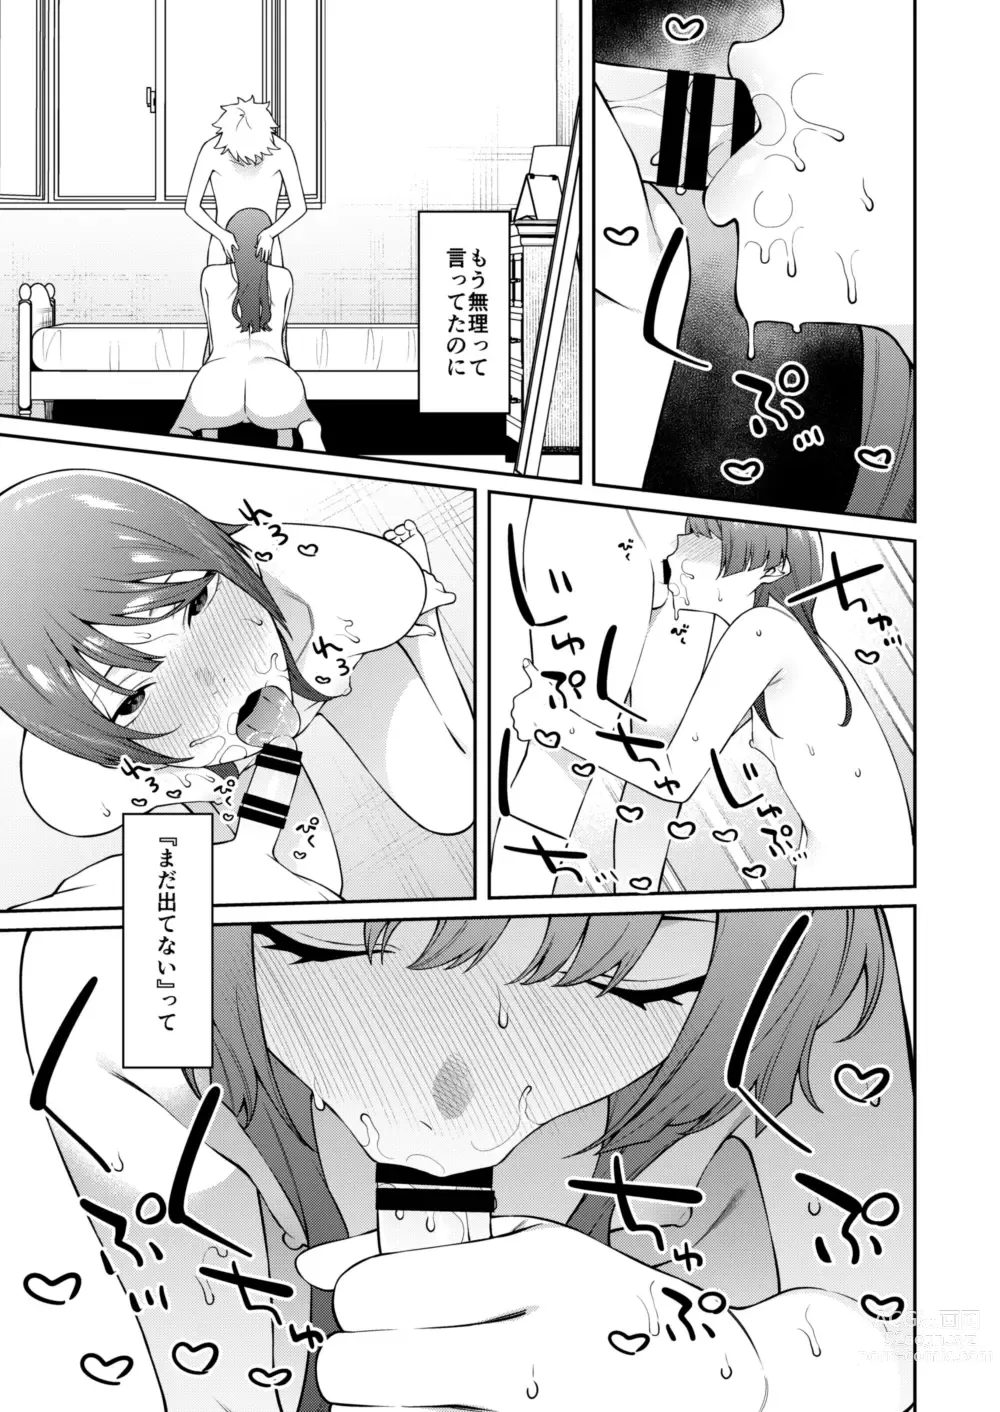 Page 24 of doujinshi Sumire-chan ha atama ga ii.